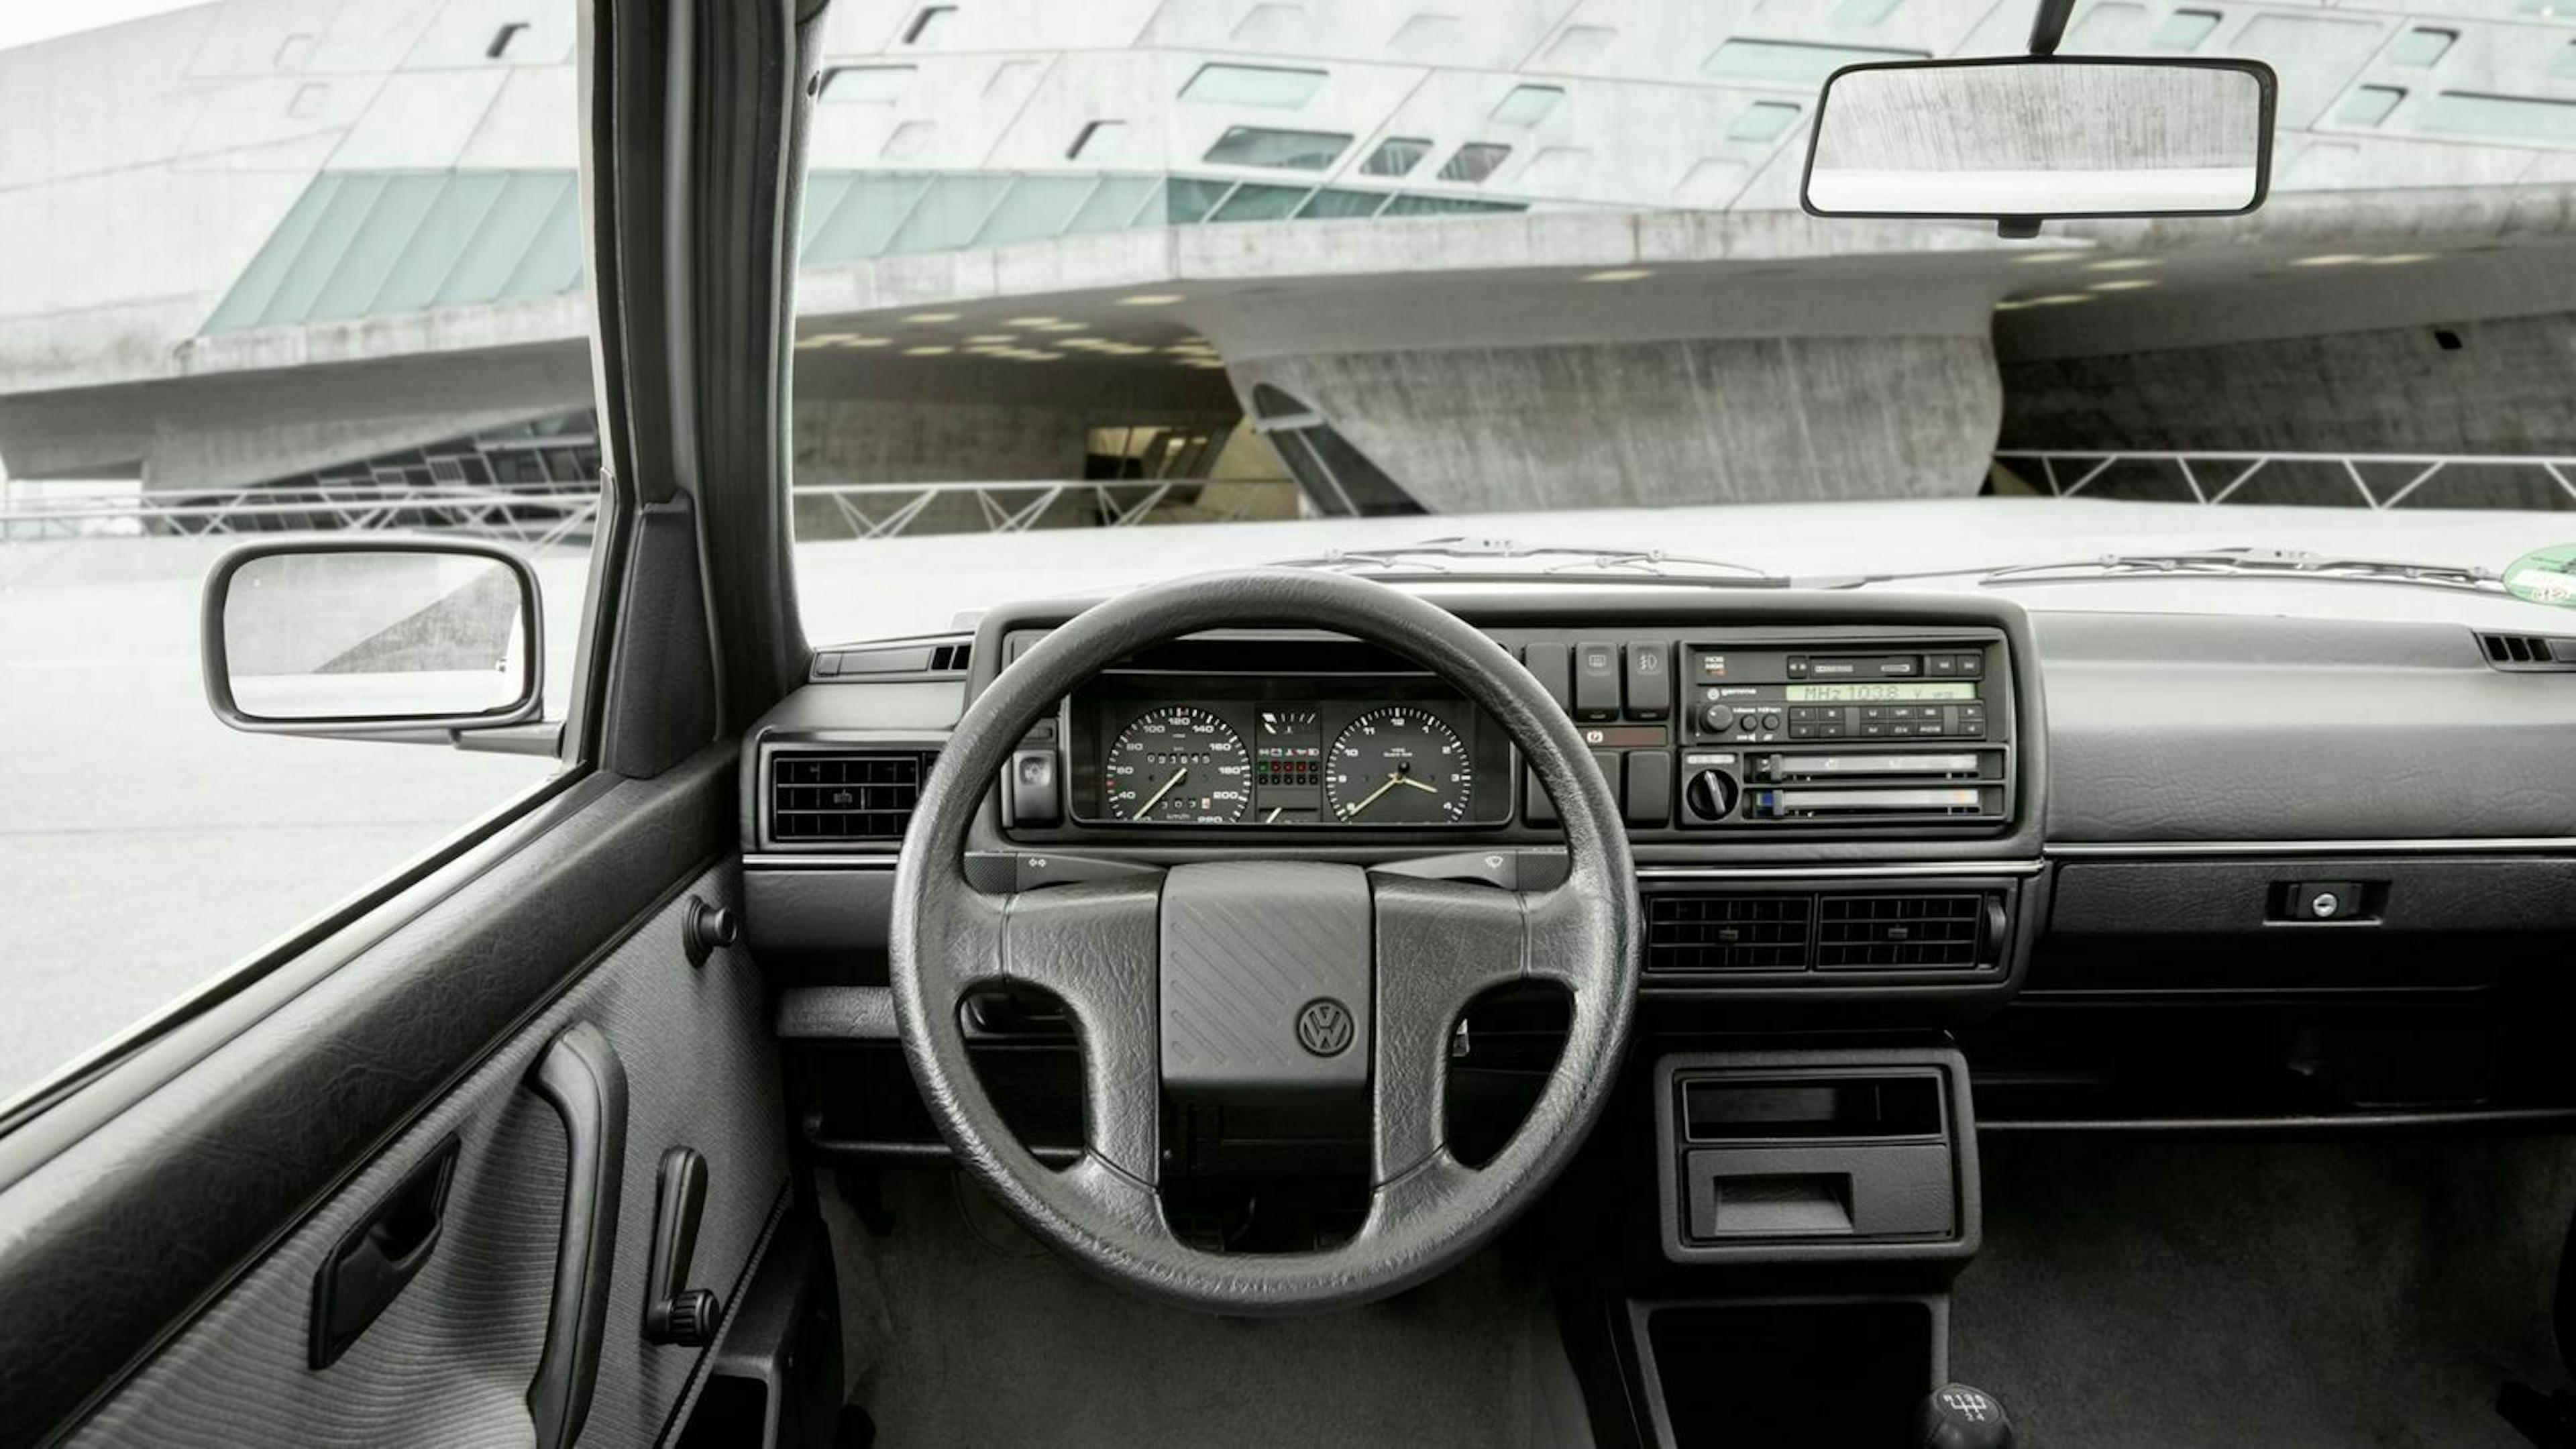 VW Golf 2 Cockpit